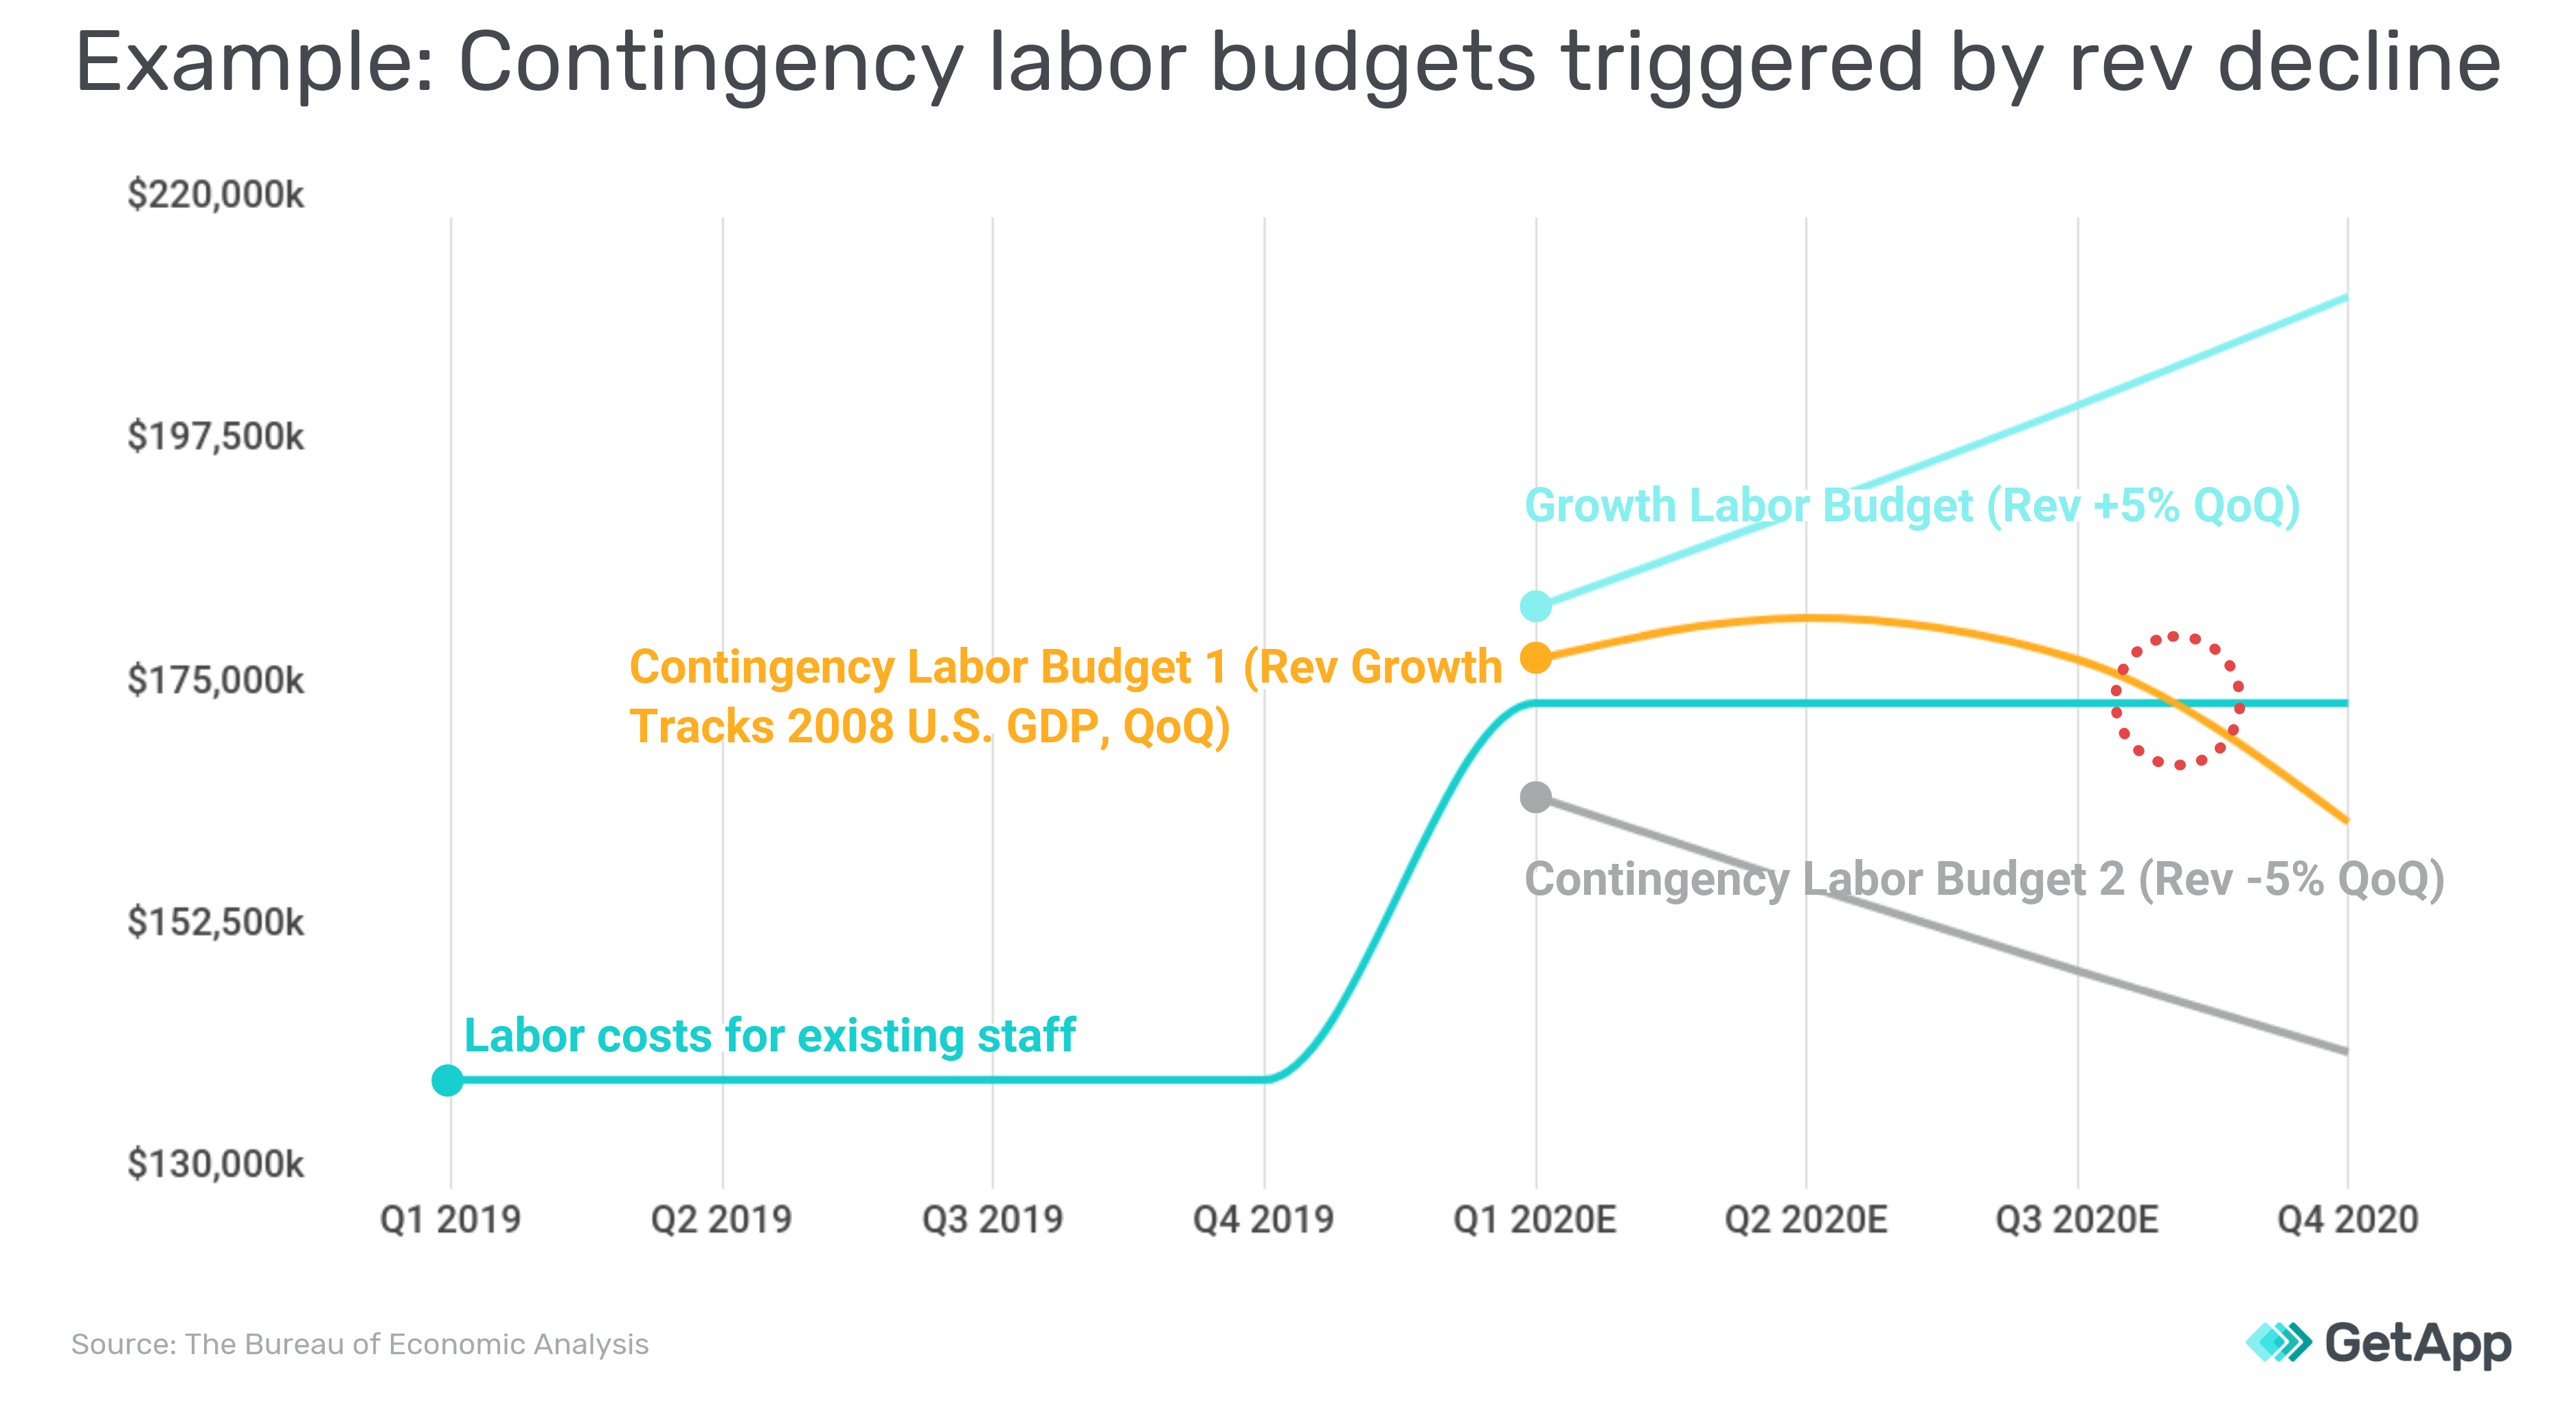 example-labor-contingency-budget-rev-decline-trigger-2008-recession-US-GDP